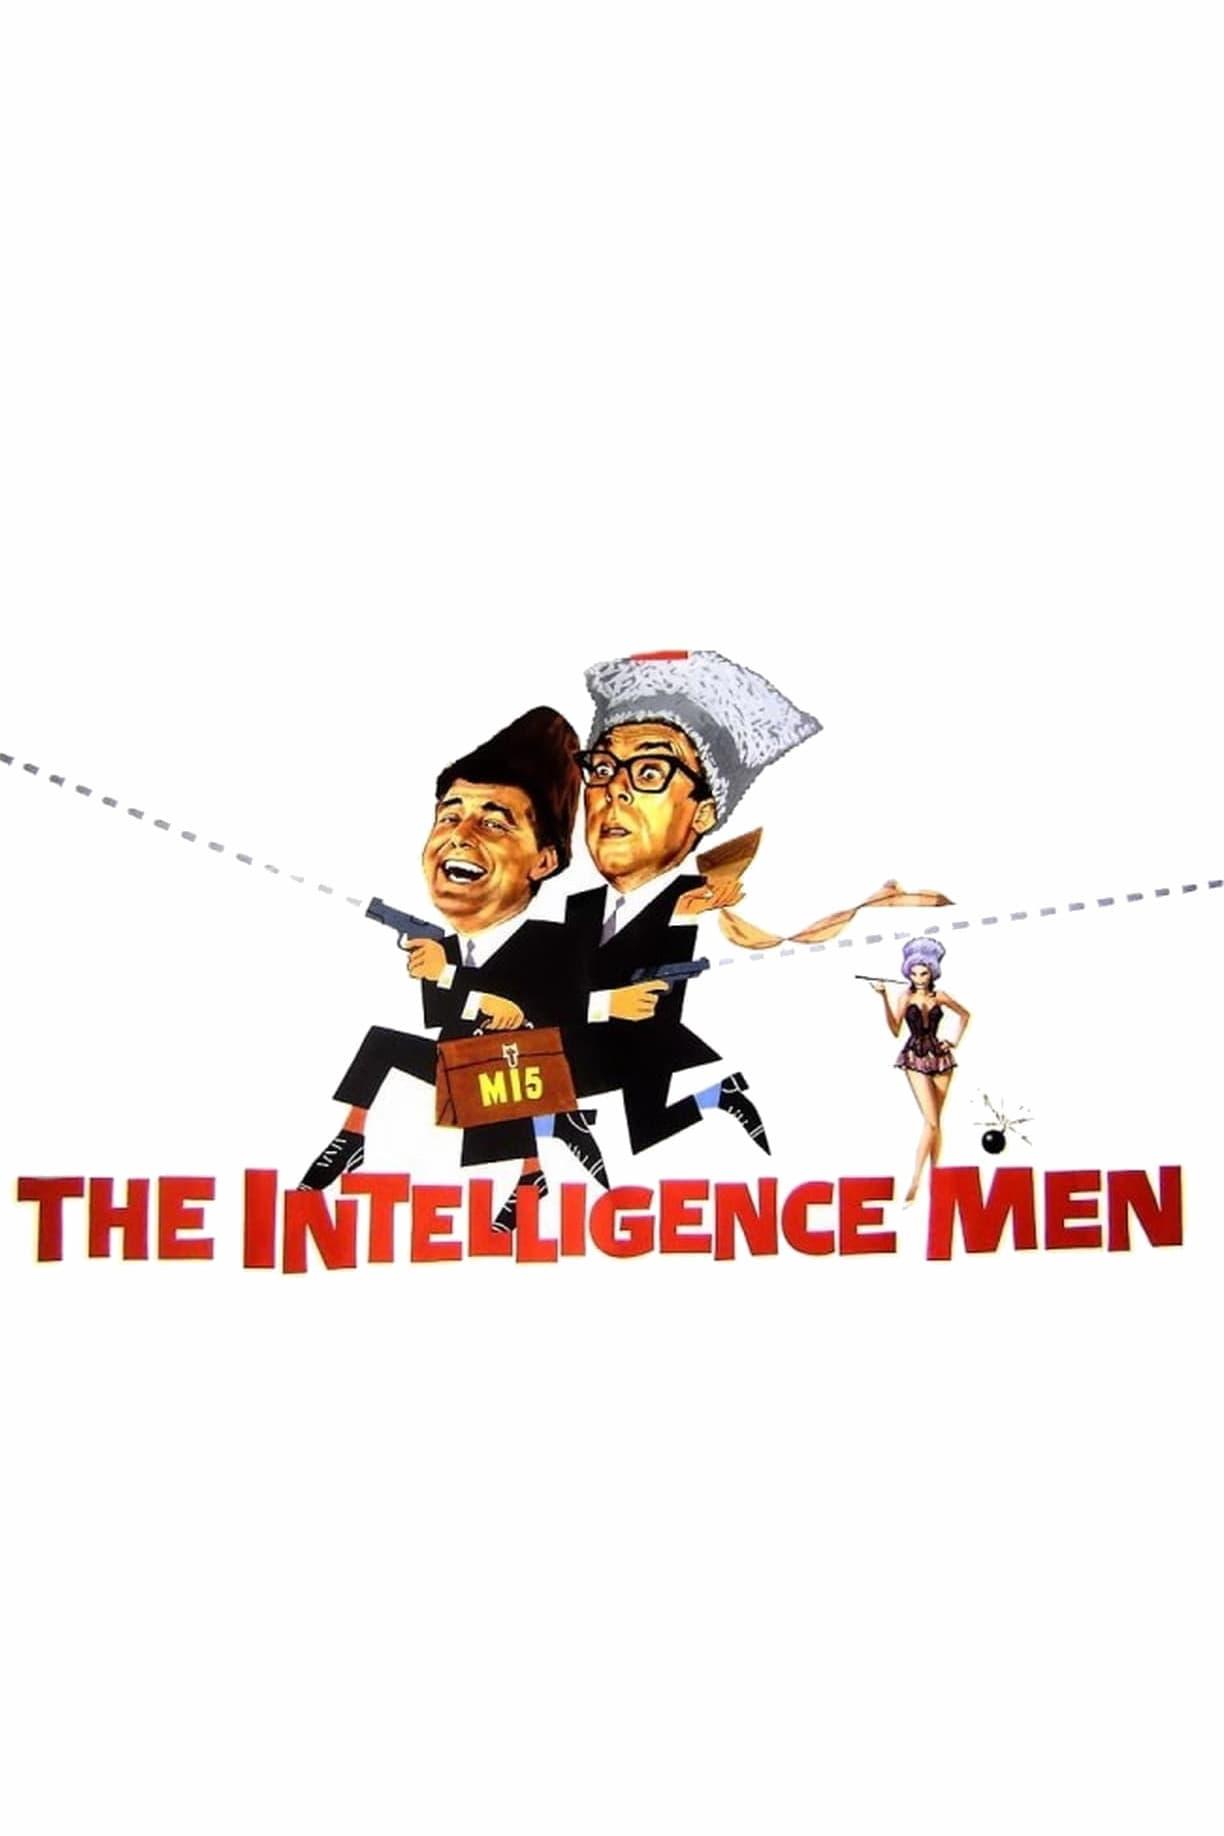 The Intelligence Men poster